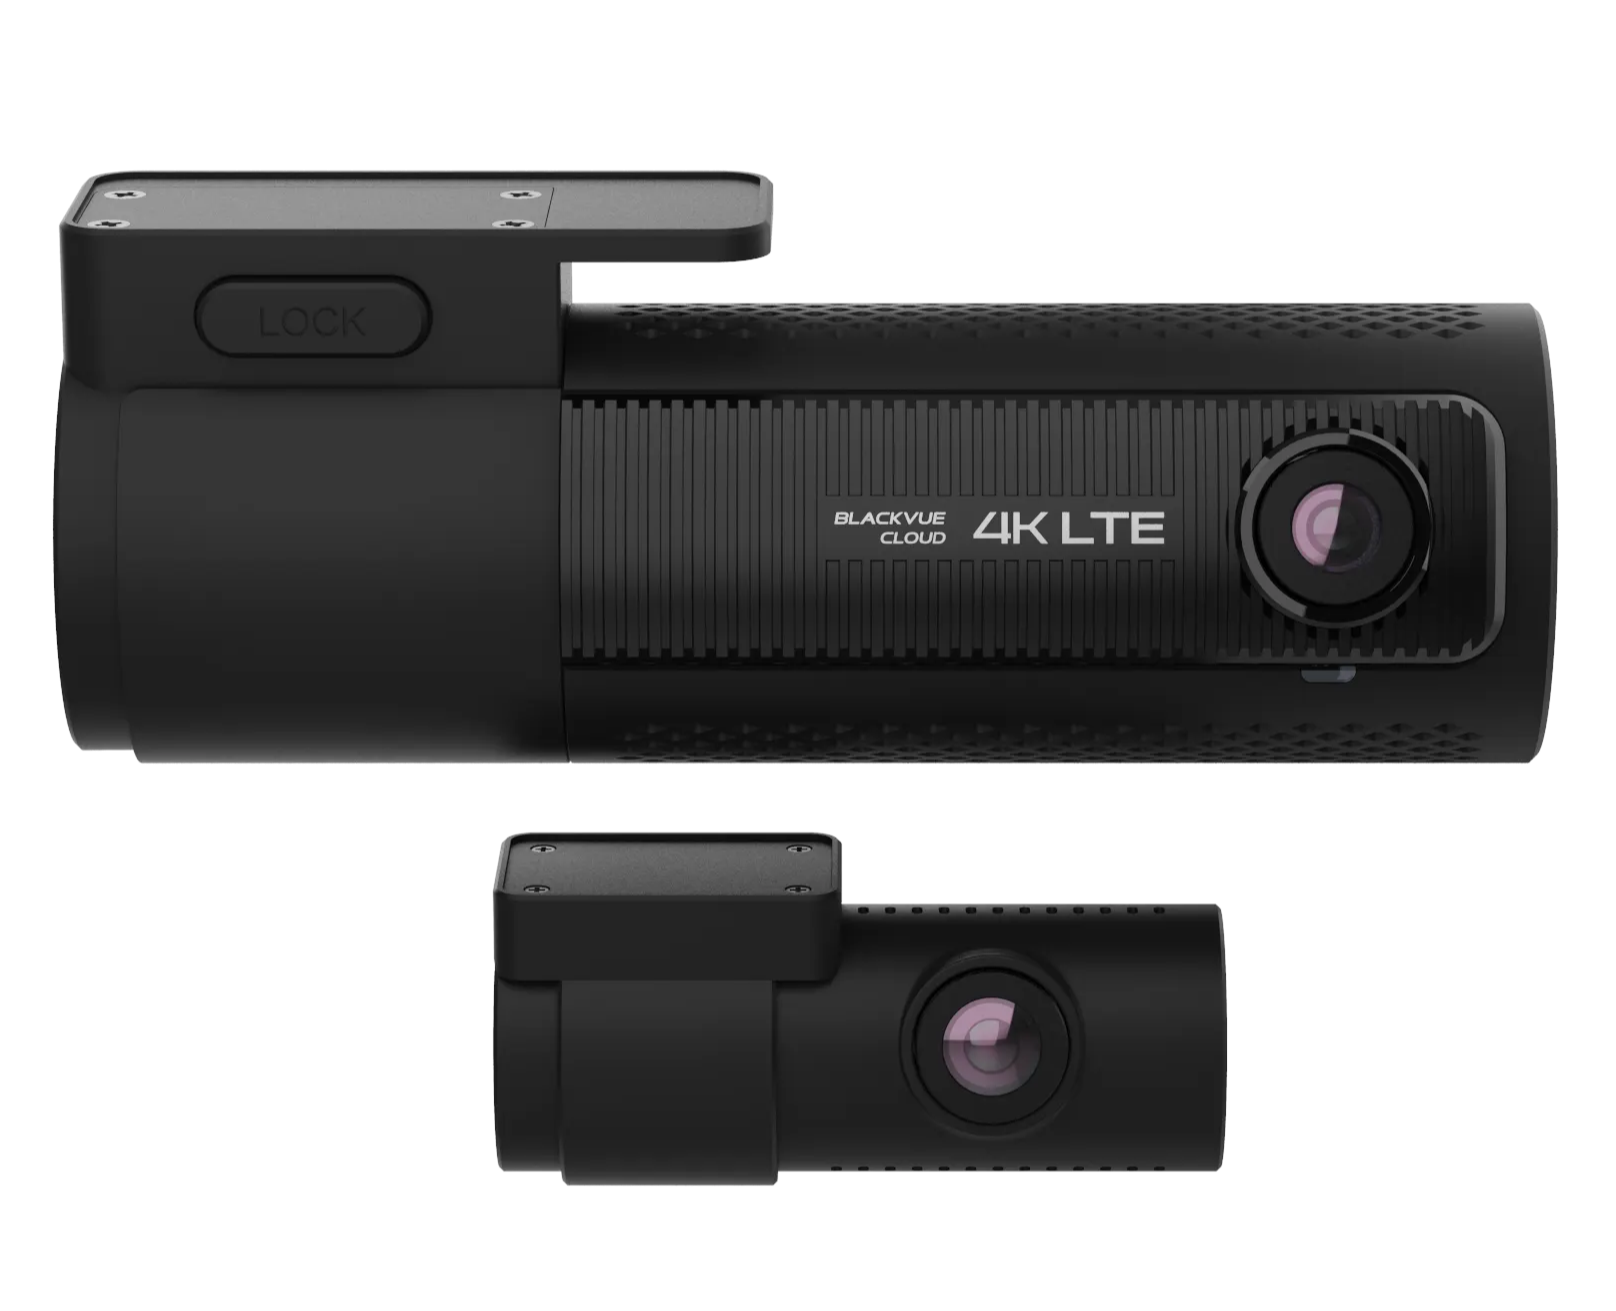 Intelligent LTE Connected Dash Cameras